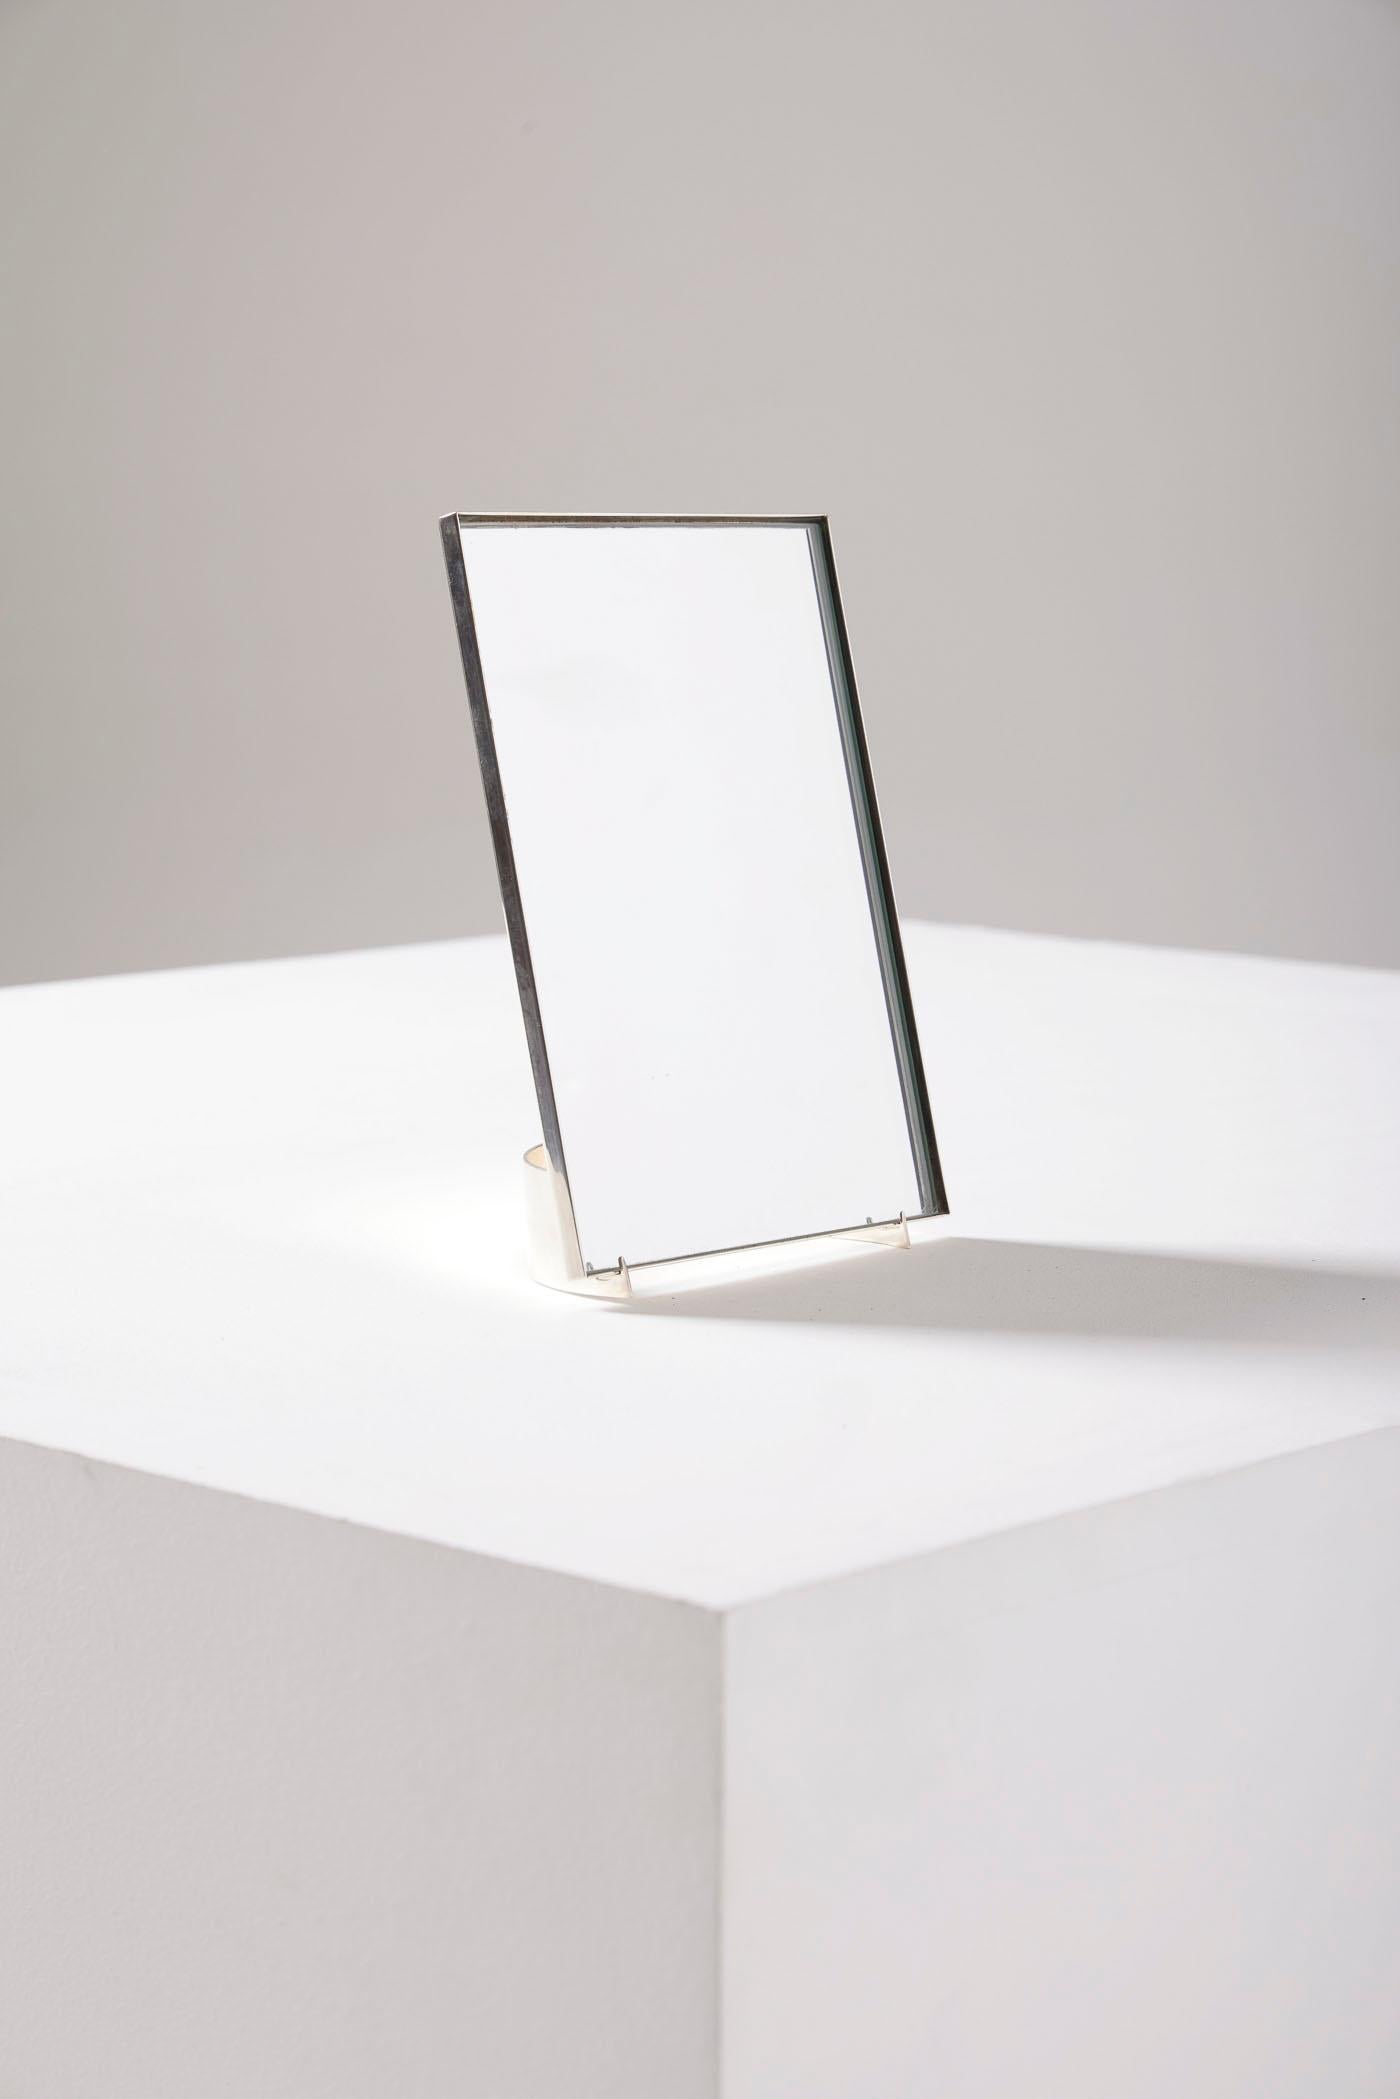 Martin Szekely mirror  In Excellent Condition In PARIS, FR